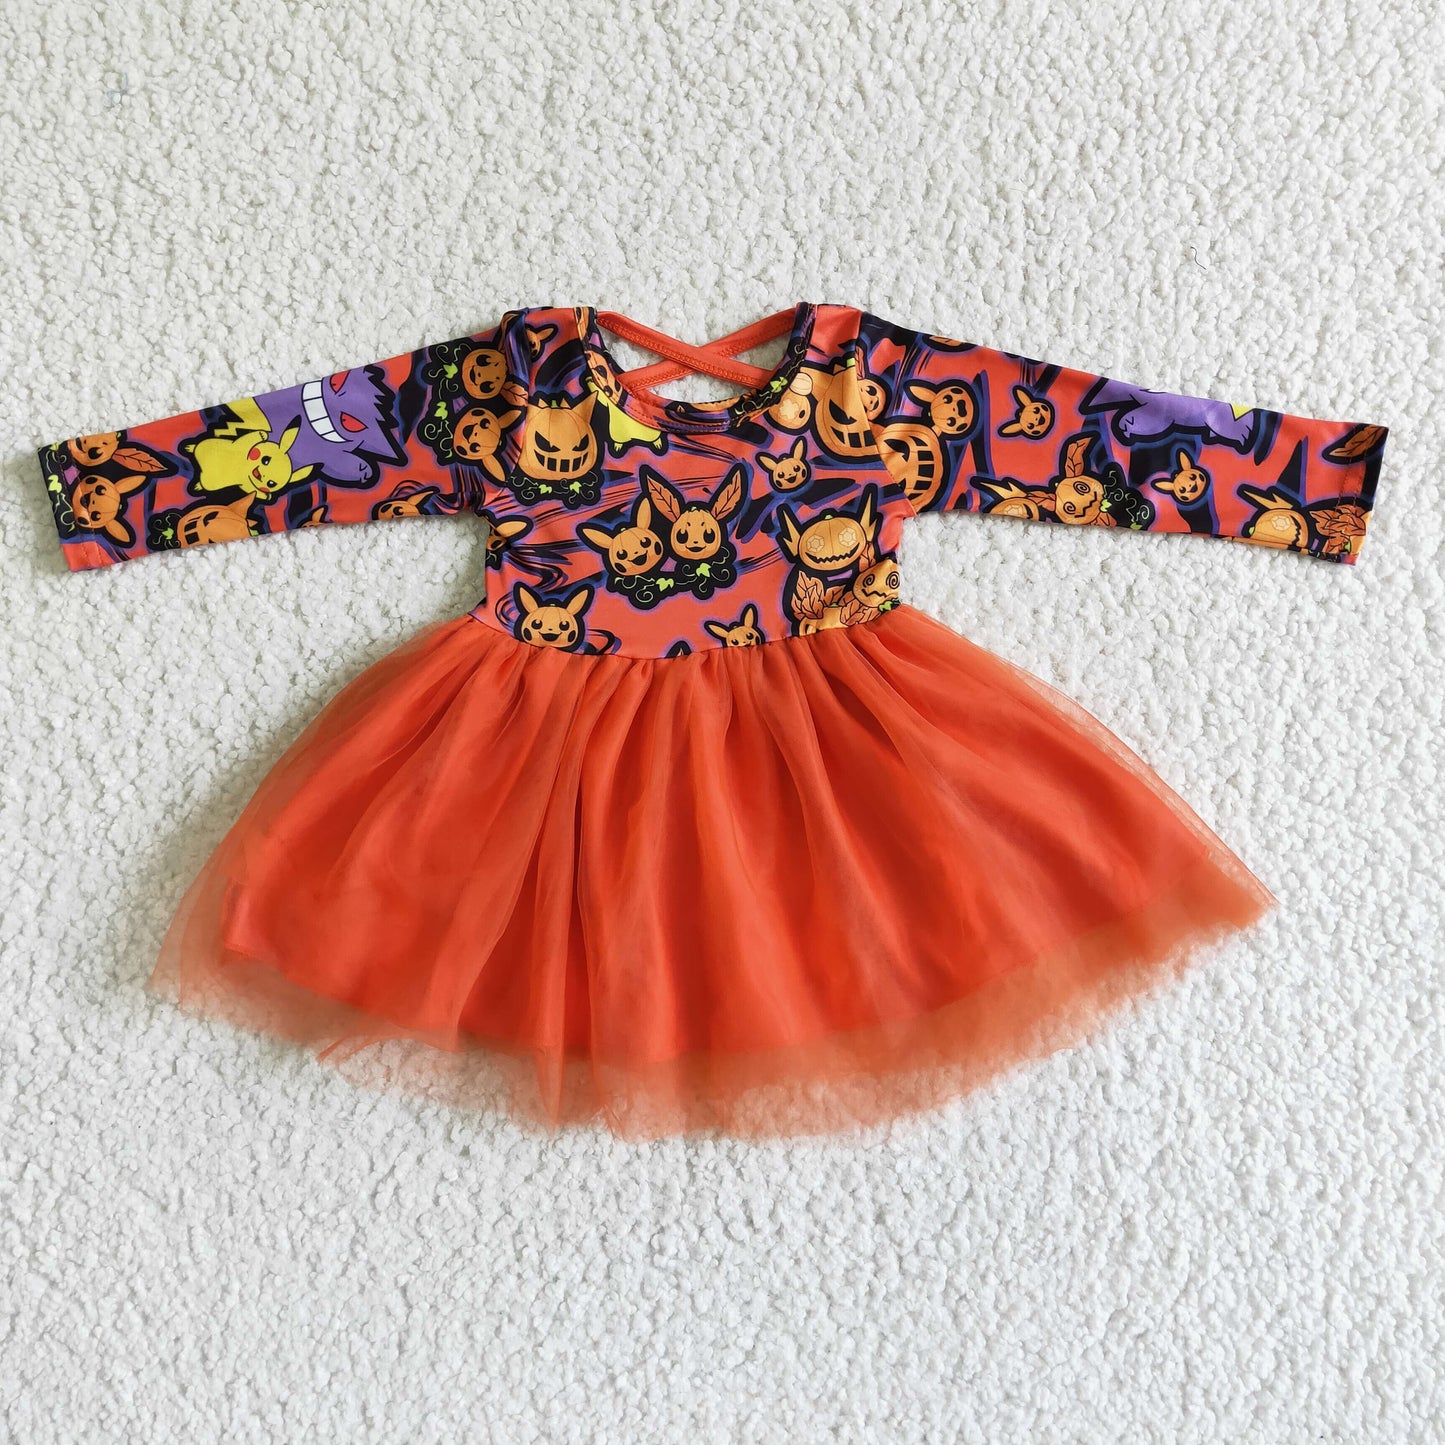 Long sleeve orange tulle baby girls Halloween dresses